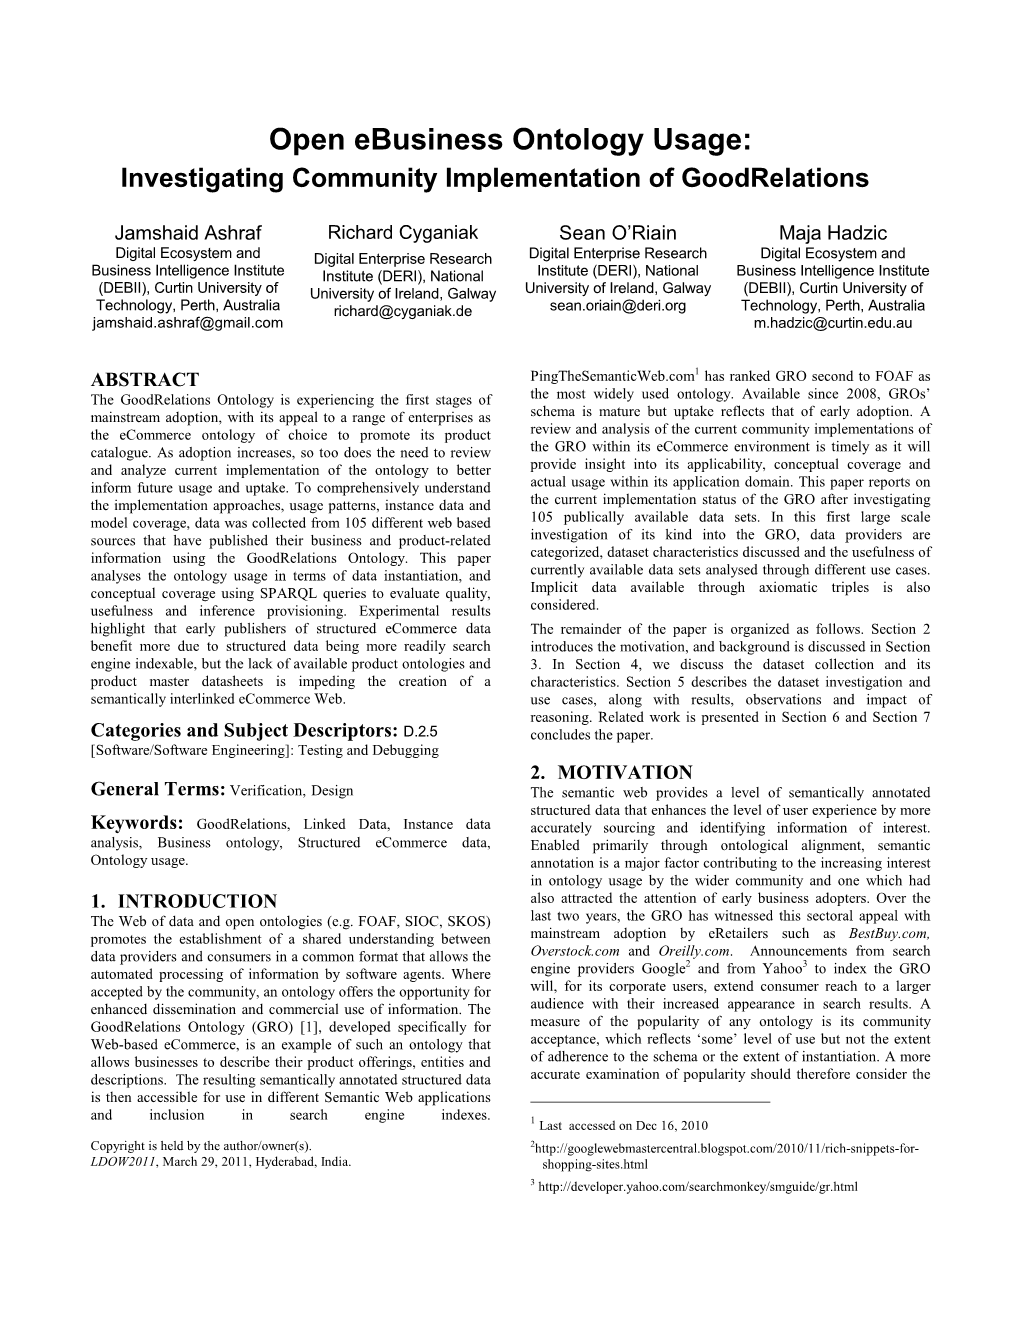 Open Ebusiness Ontology Usage: Investigating Community Implementation of Goodrelations